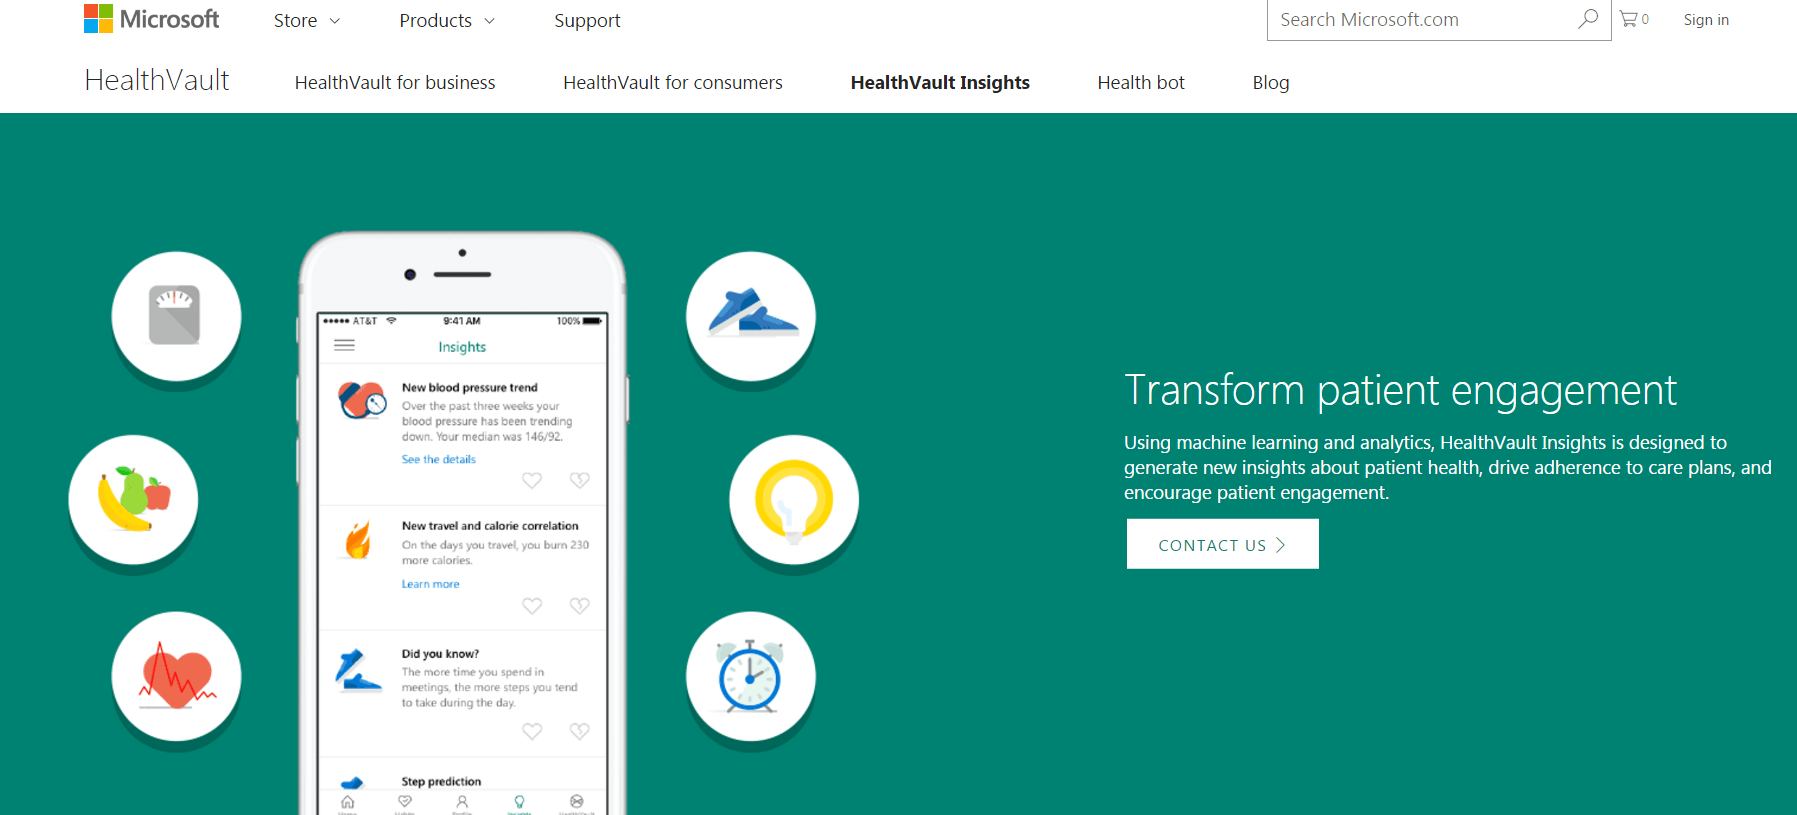 Microsoft HealthVault Website (2017)